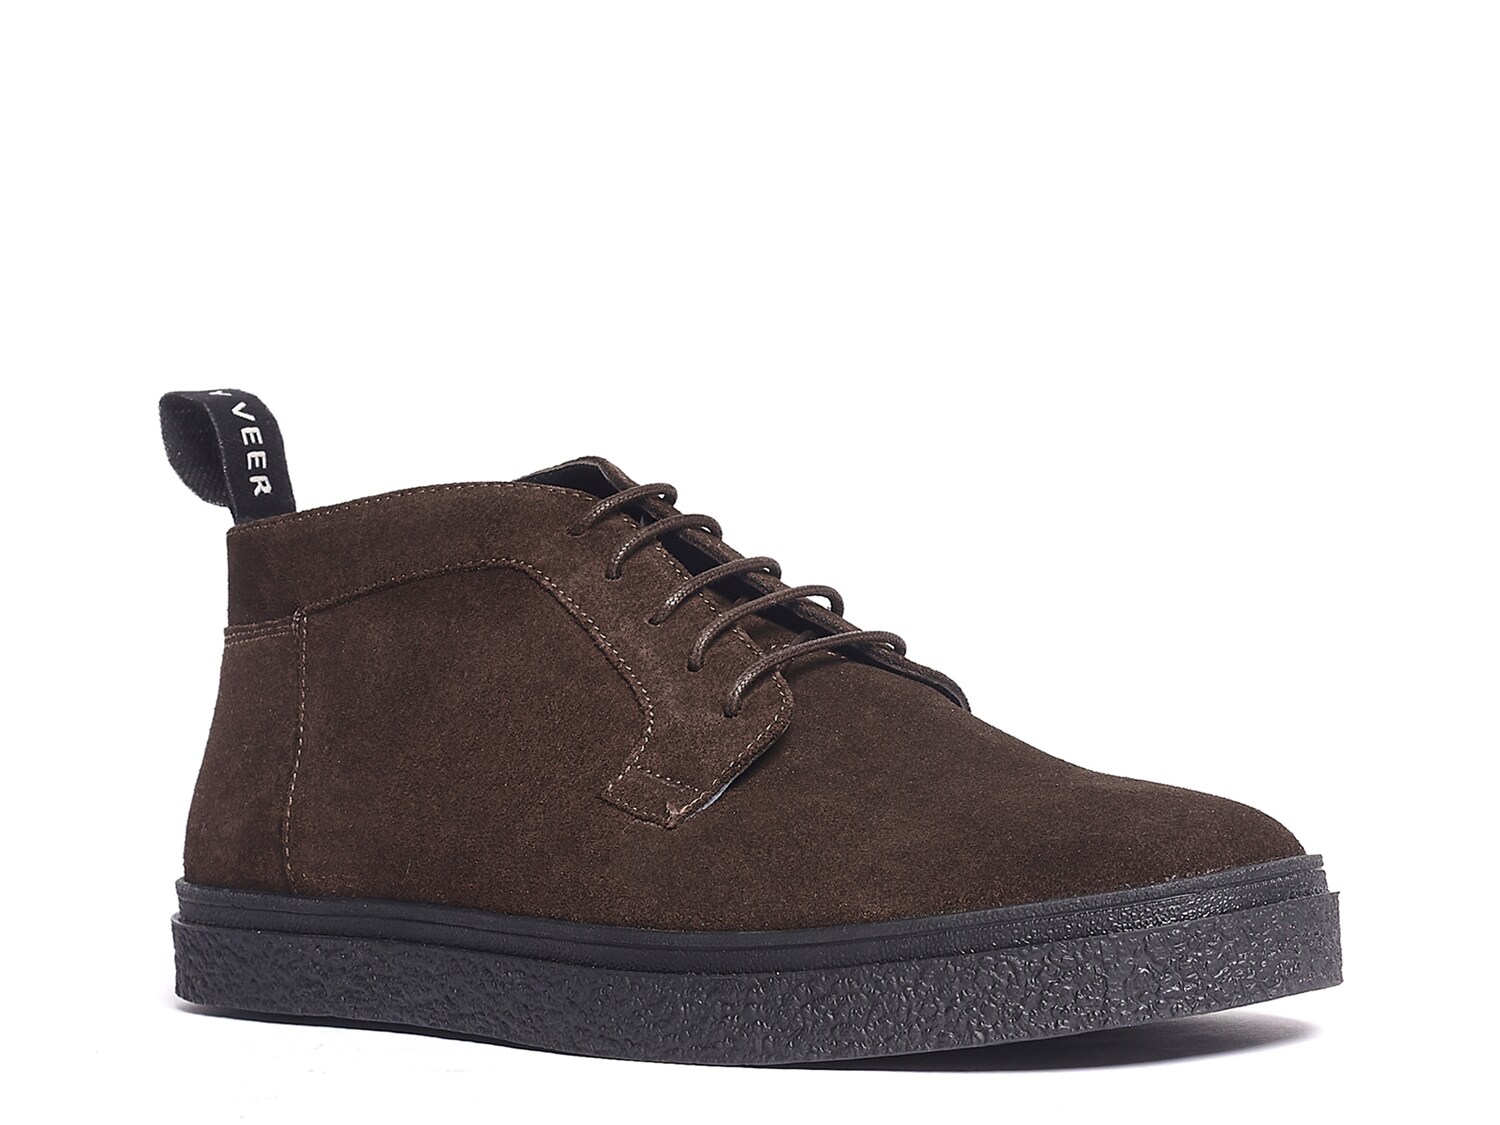 Ботинки Anthony Veer Bushwick Chukka, темно-коричневый мужские замшевые ботинки чукка на шнуровке george anthony veer